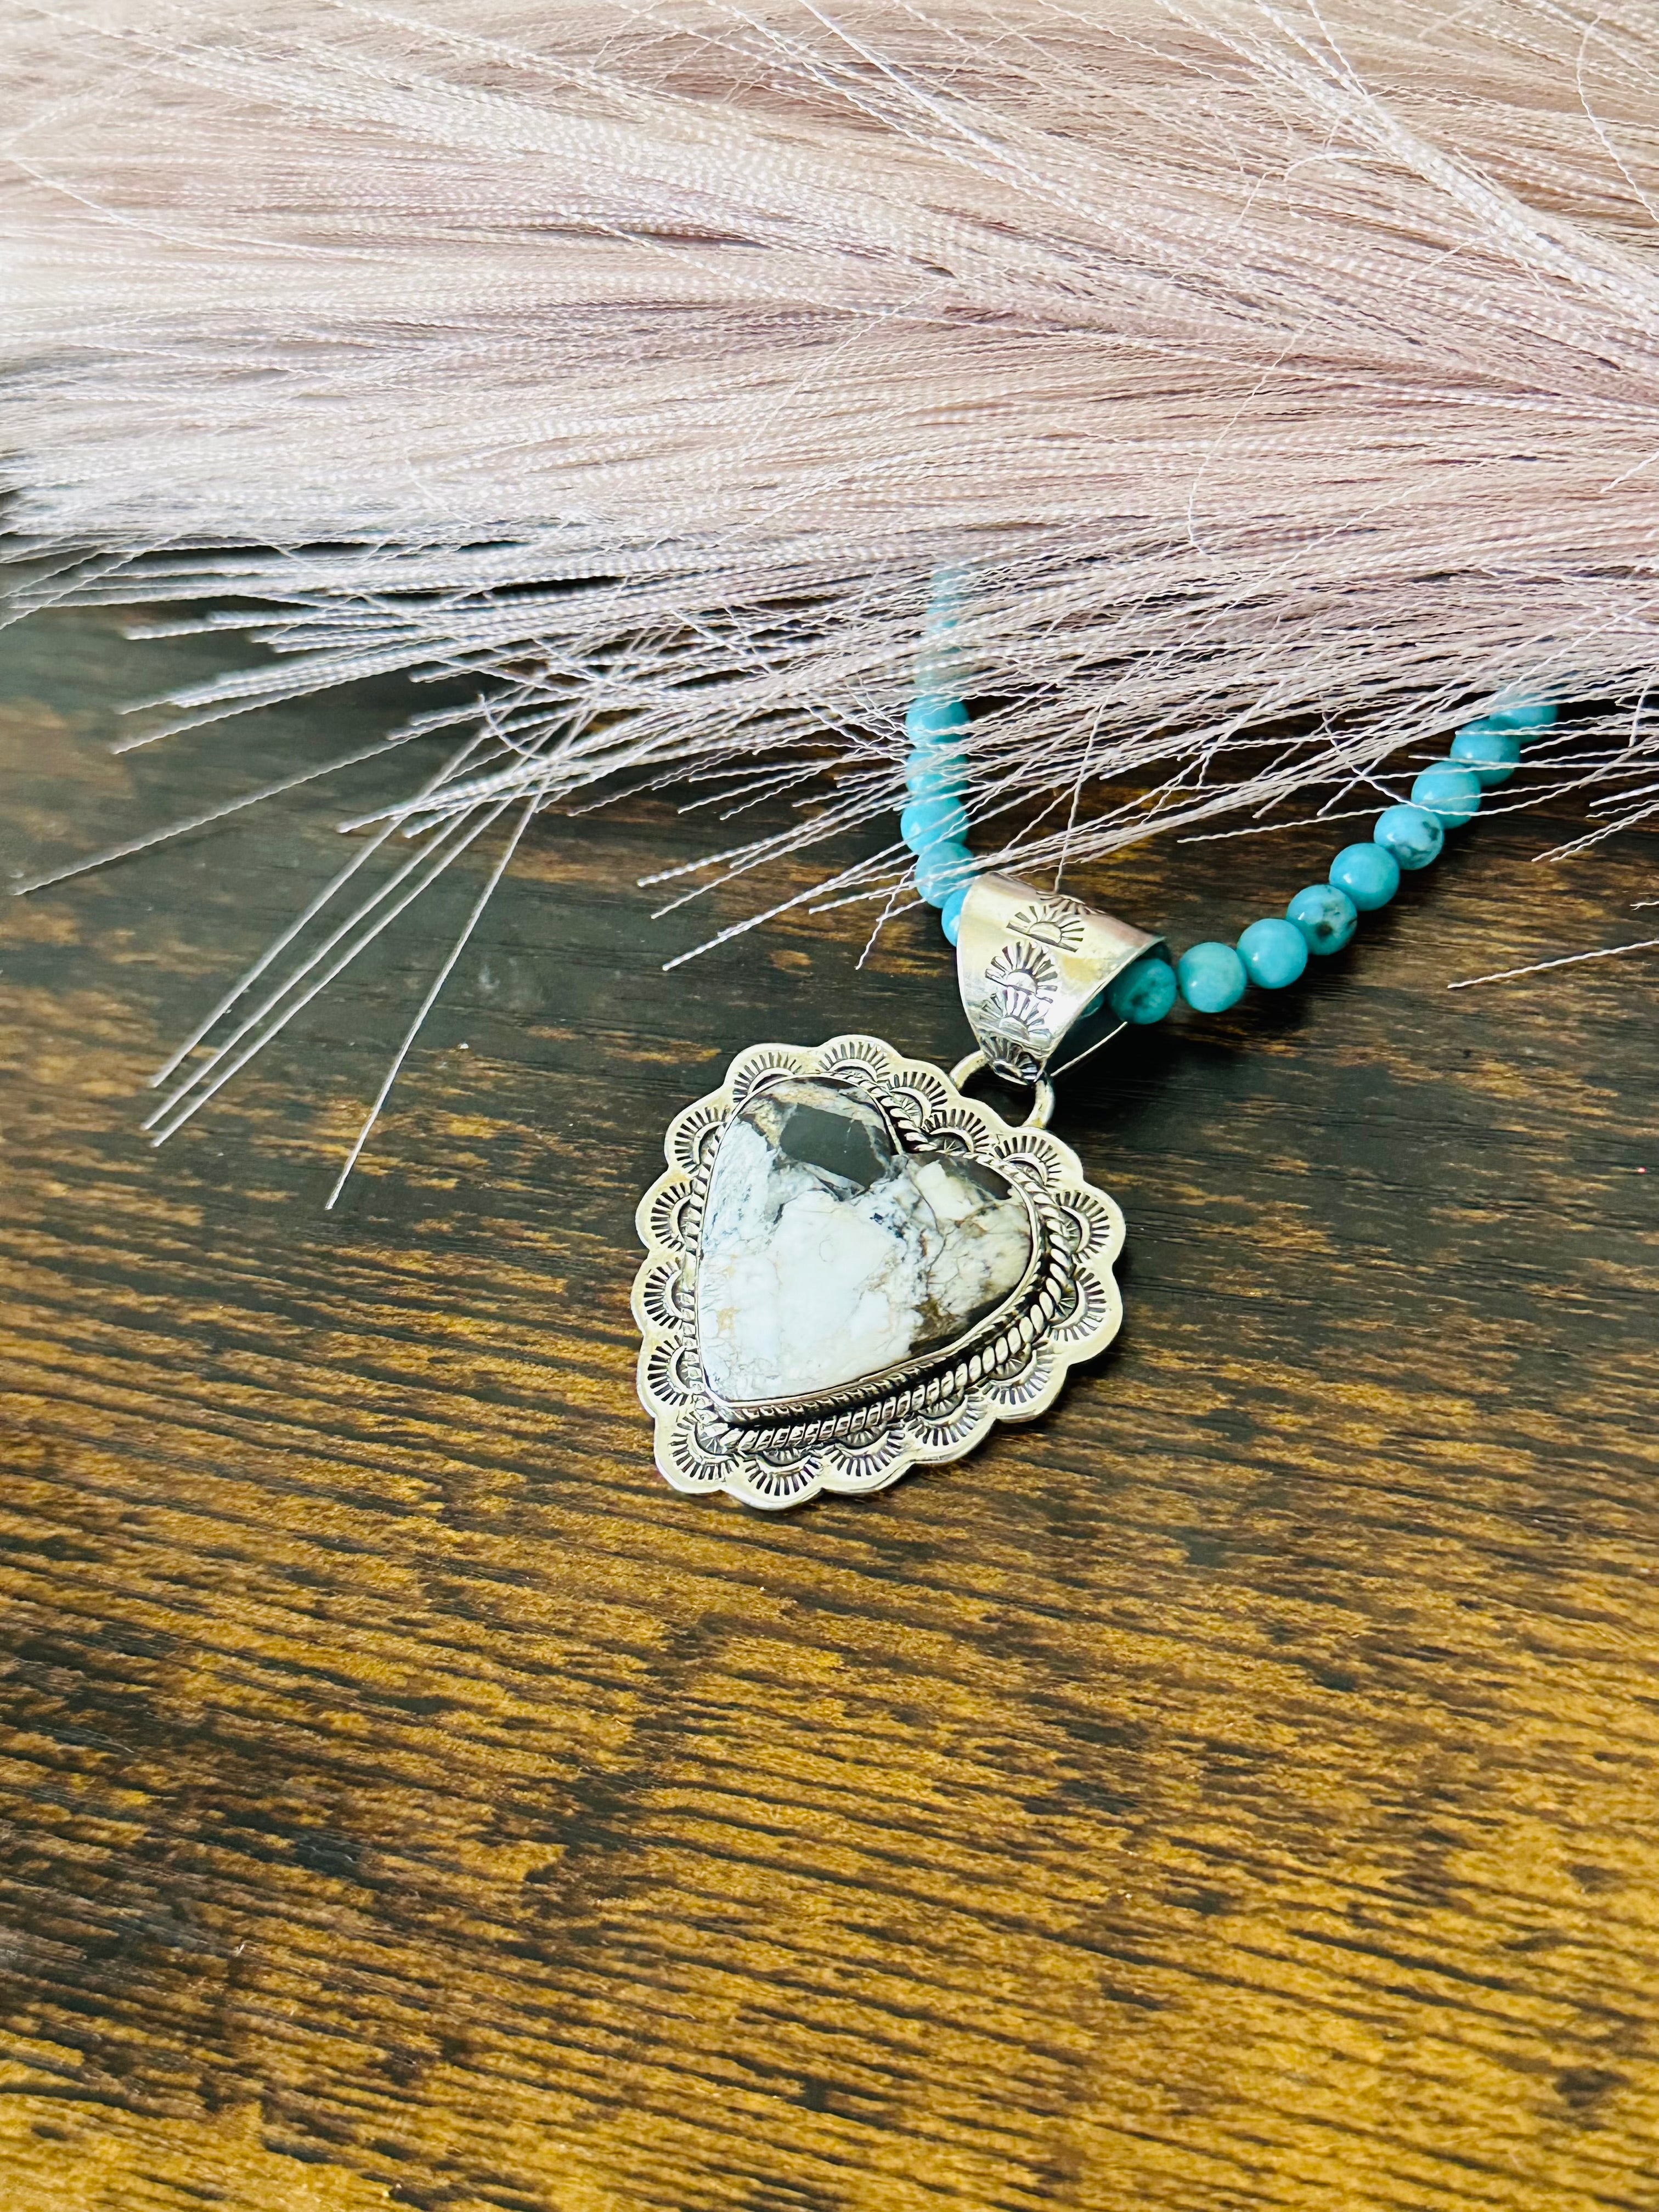 Southwest Handmade White Buffalo & Sterling Silver Heart Pendant